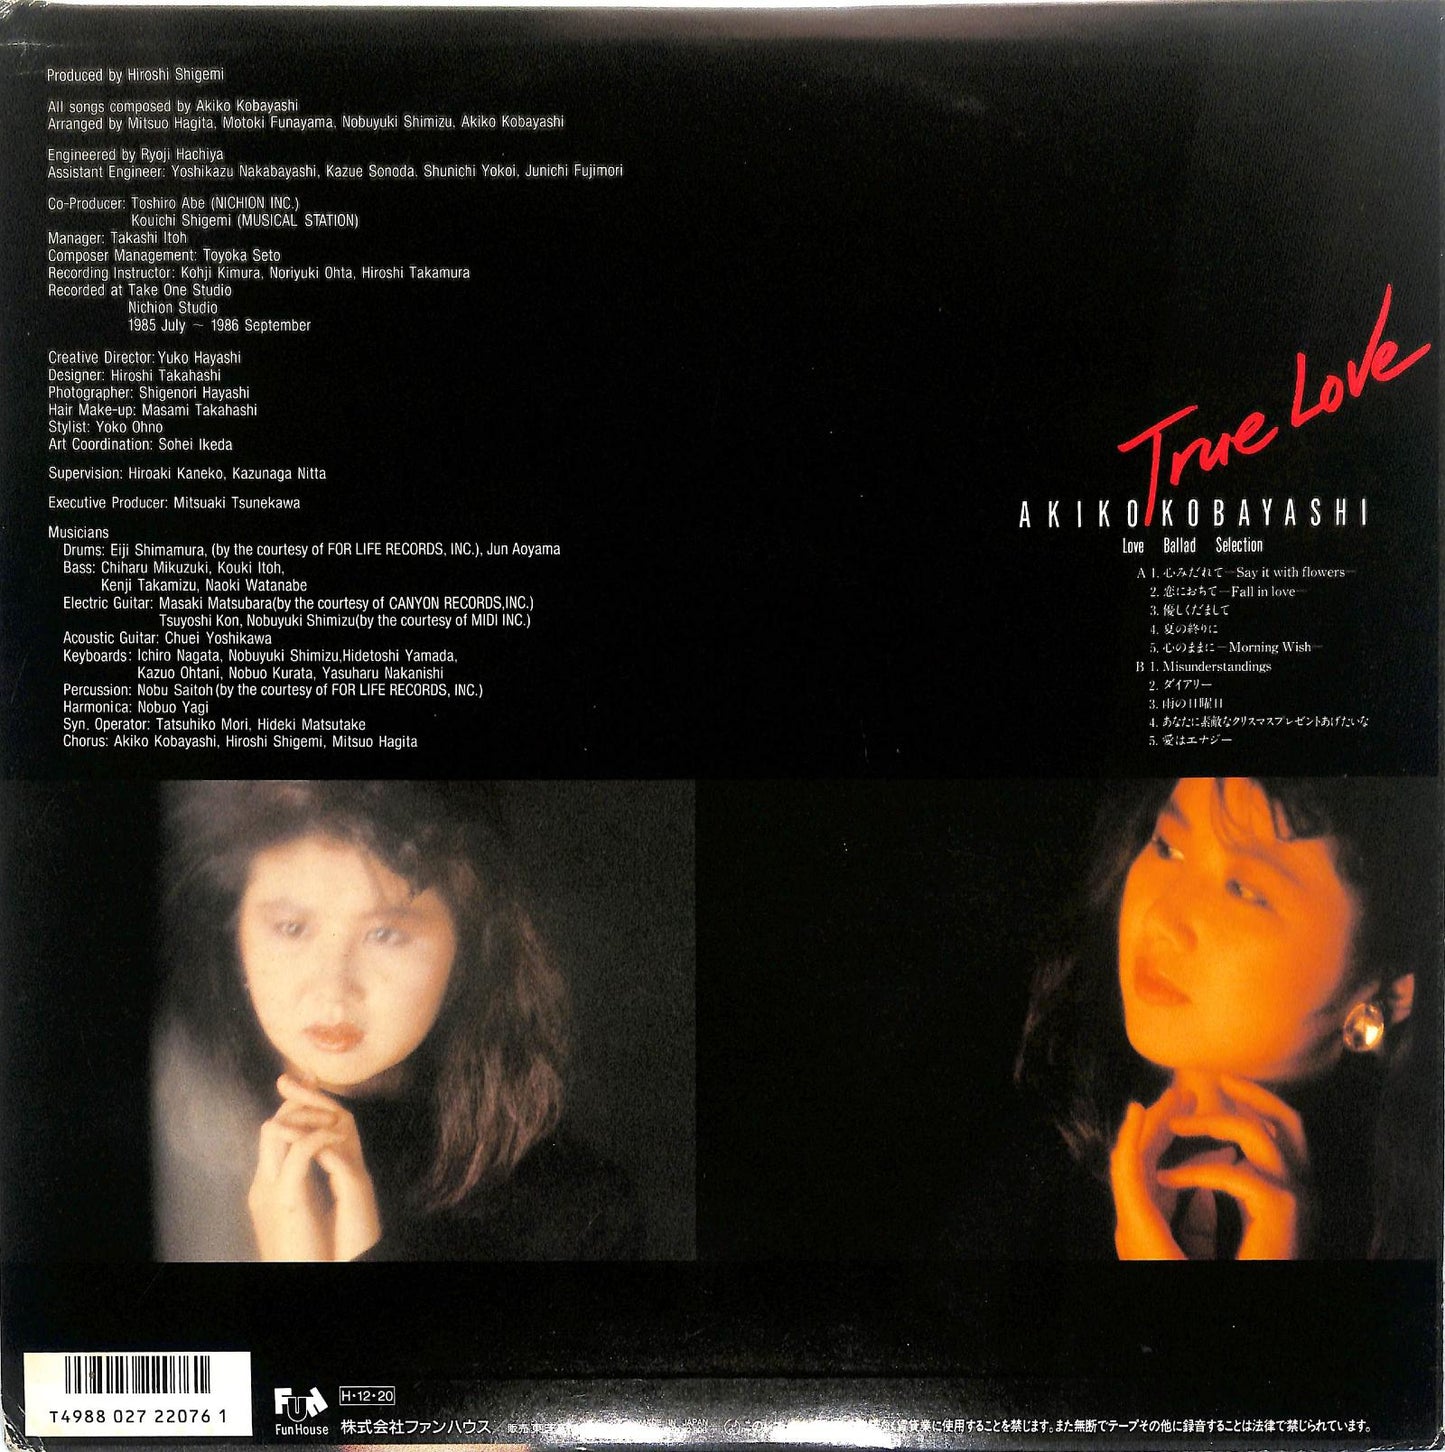 AKIKO KOBAYASHI - True Love Love Ballad Selection